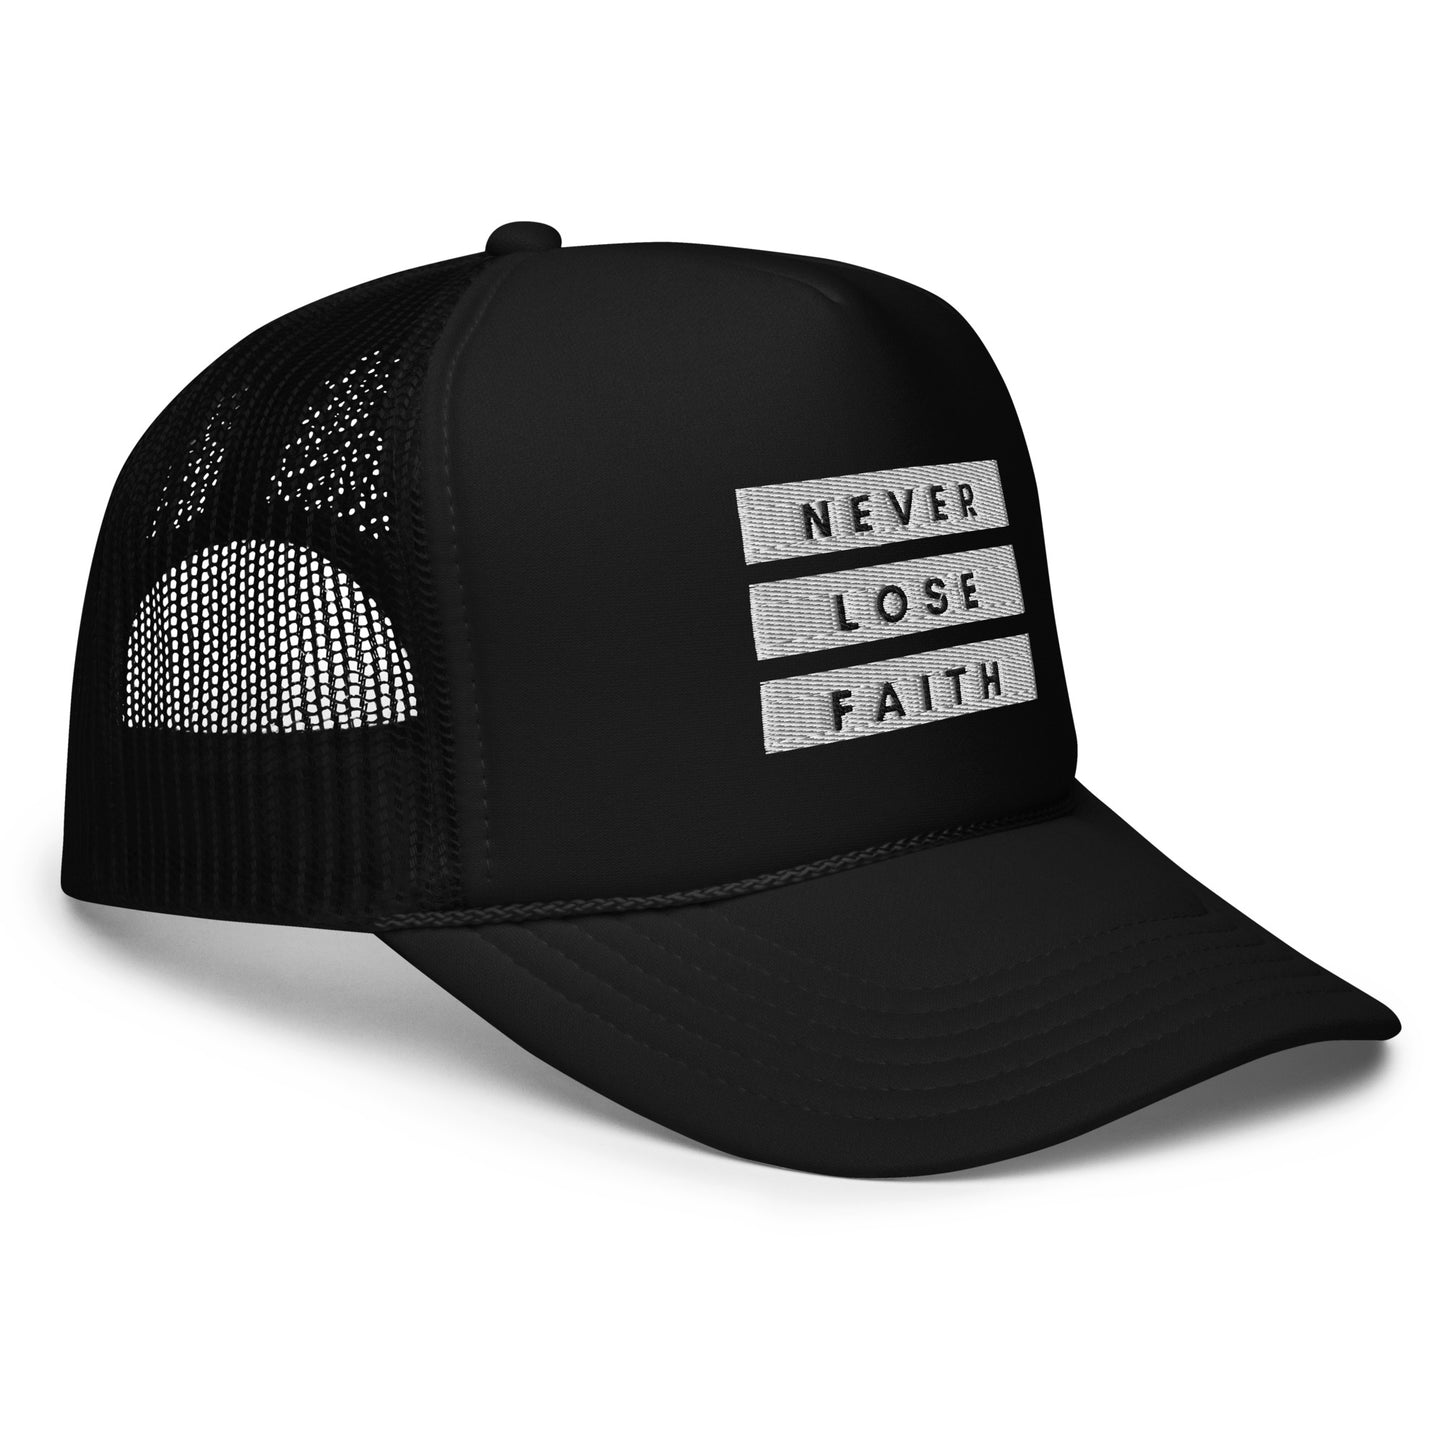 Never Lose Faith Black foam trucker hat